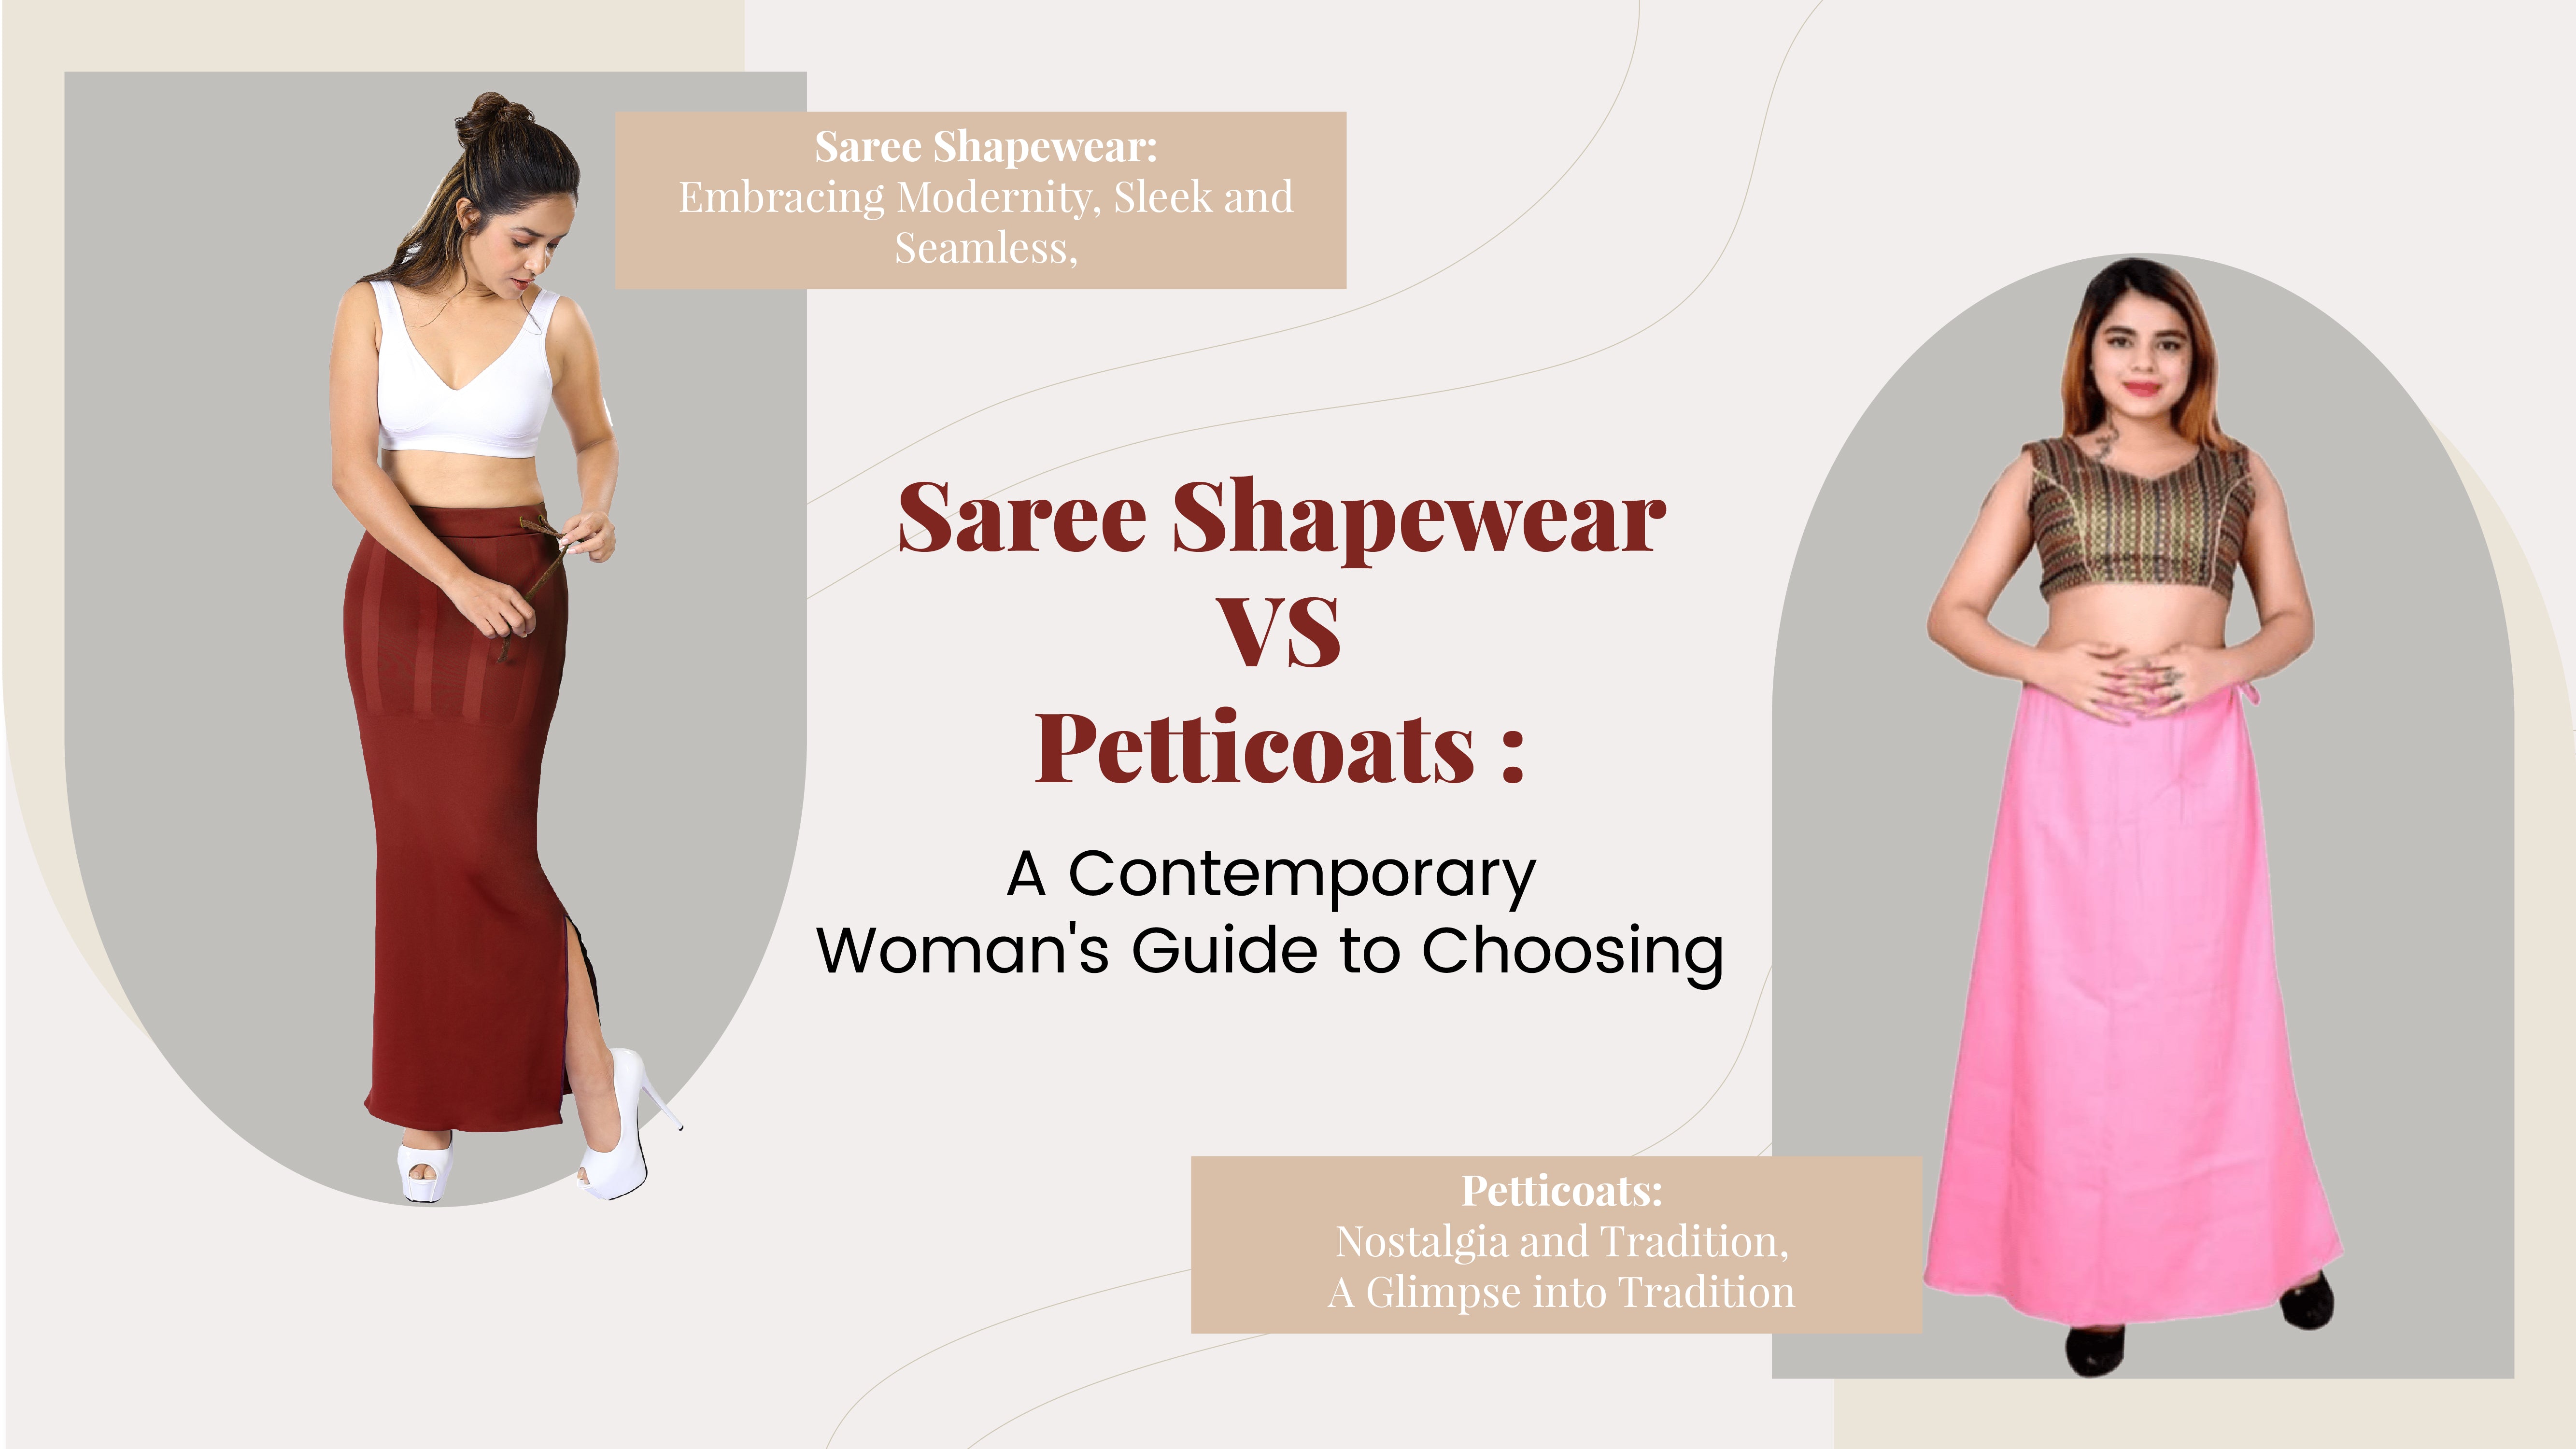 Others, Saree Shapewear